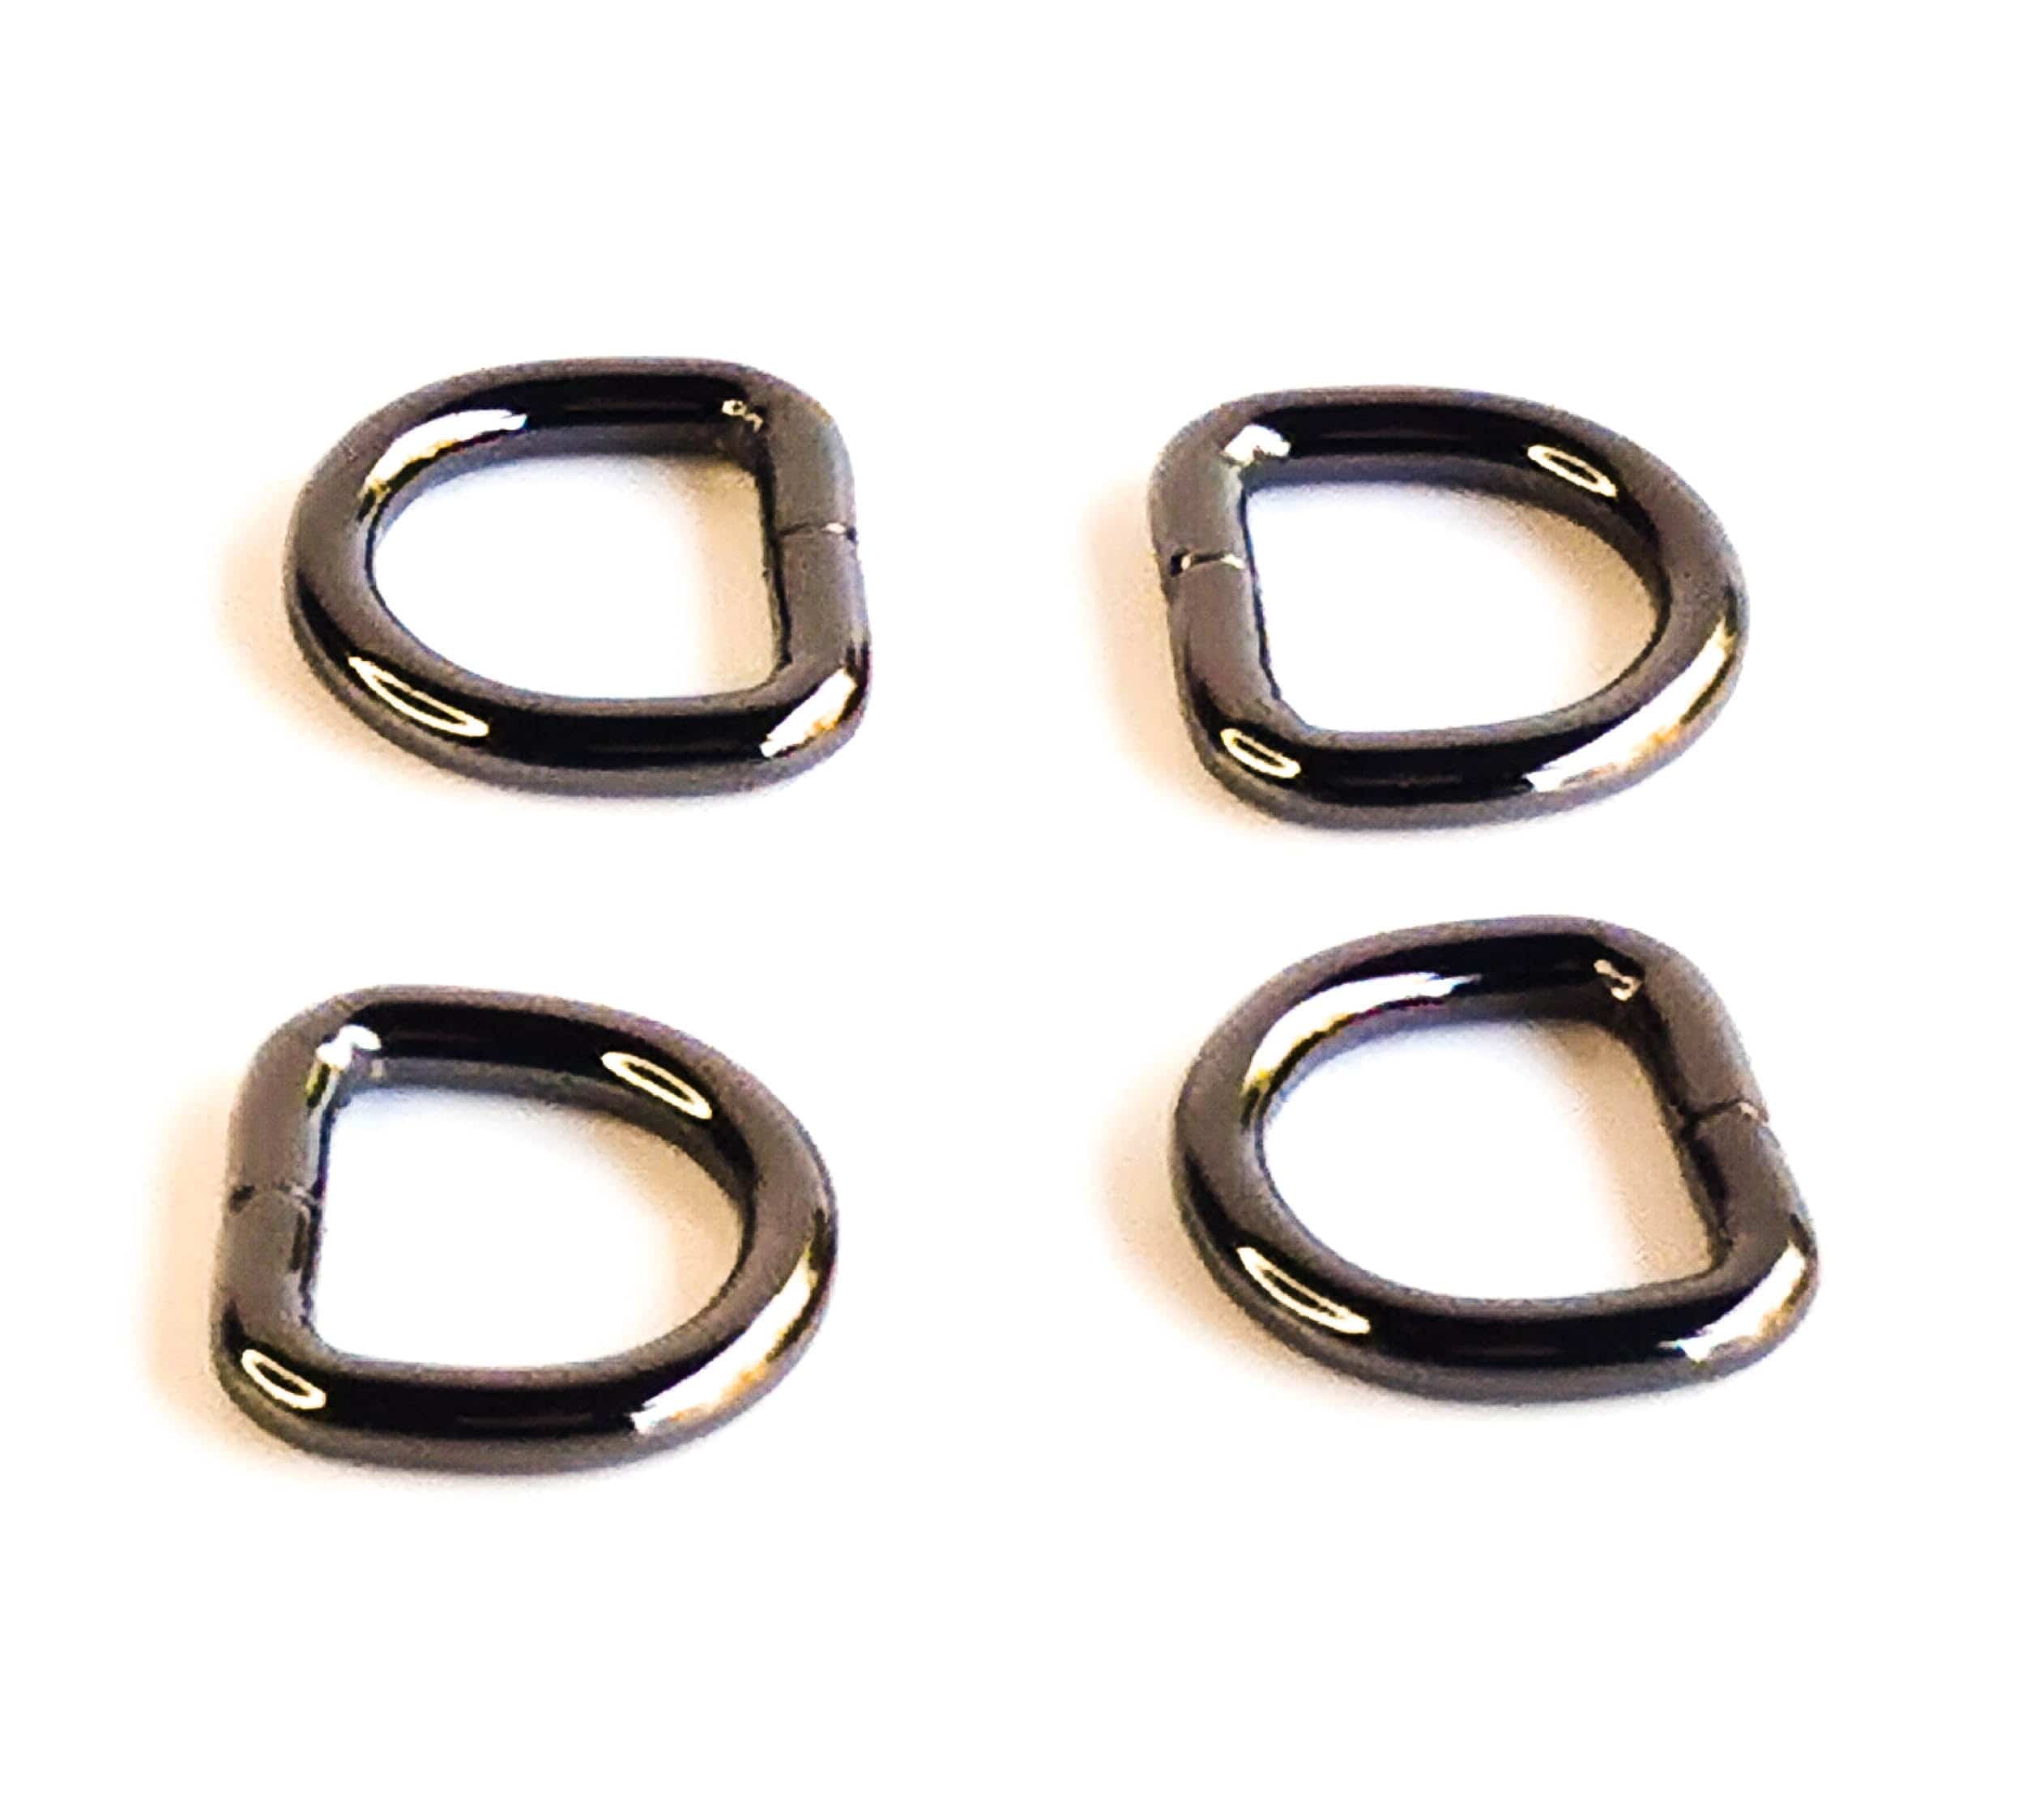 Kiwi Bagineers Ring 1/2" (13mm) / Gunmetal D rings for bags.. Pack of 4. Kiwi Bagineers